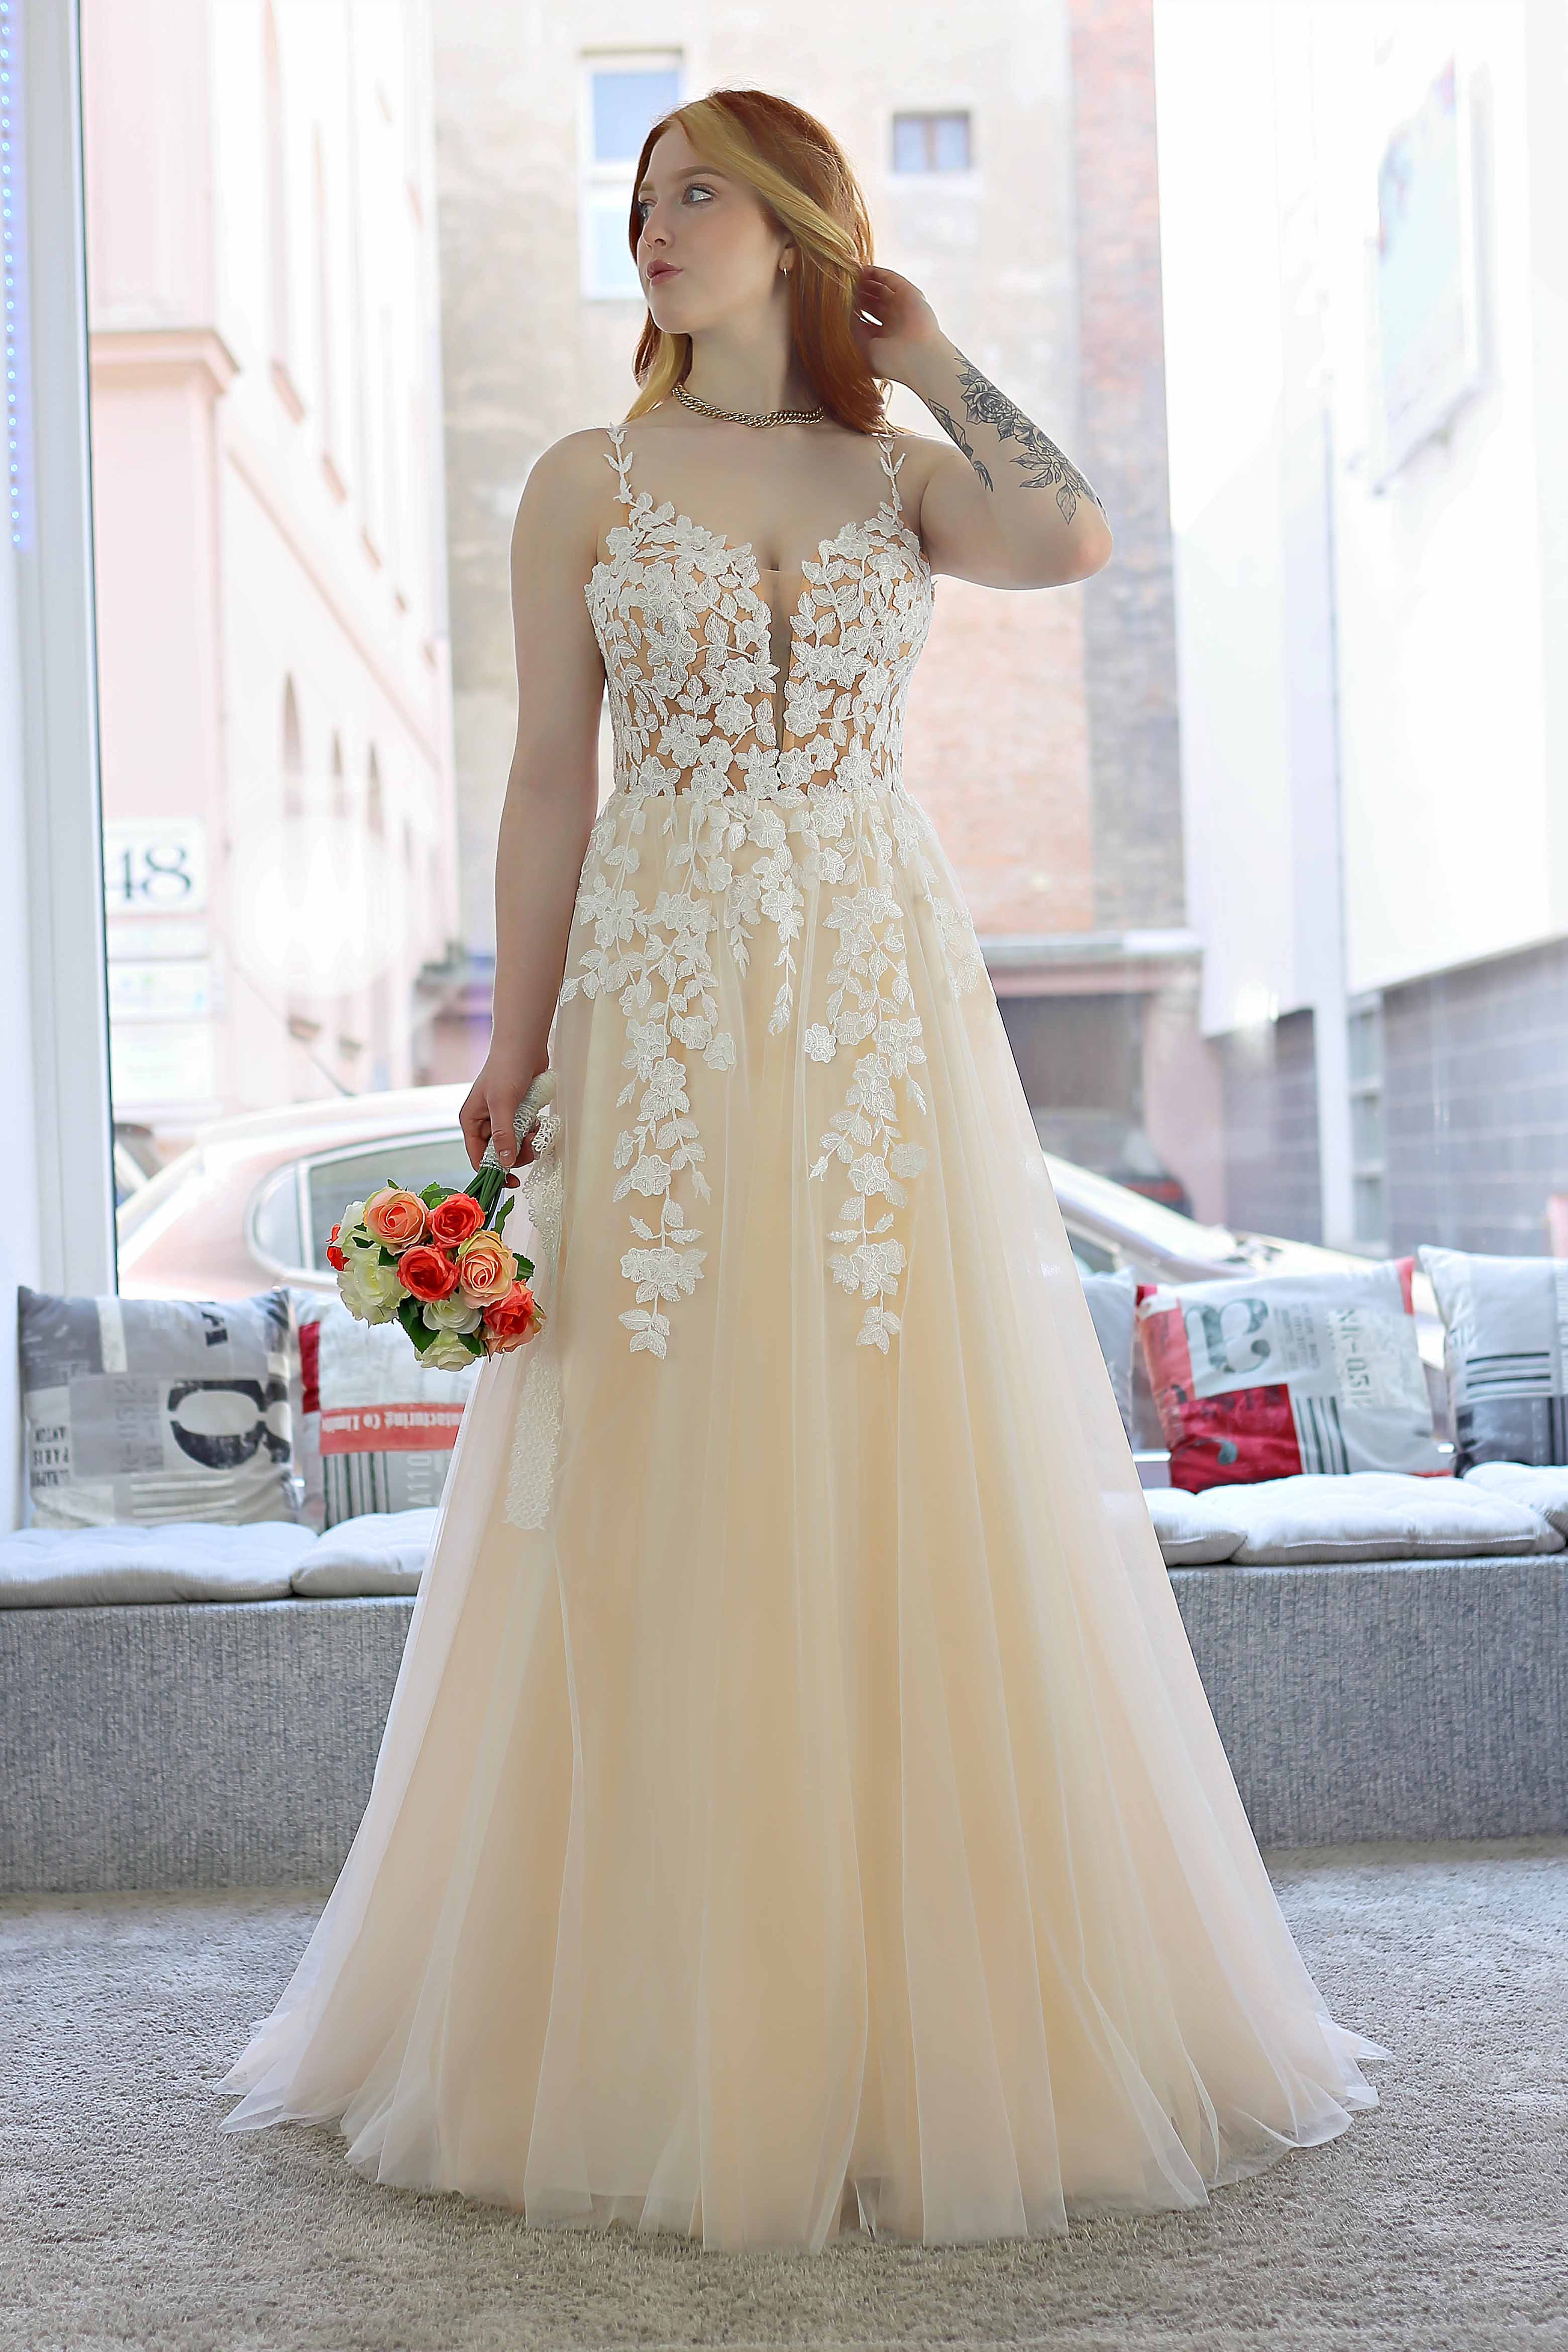 Schantal Brautkleid aus der Kollektion „Pilar“, Modell 14004.